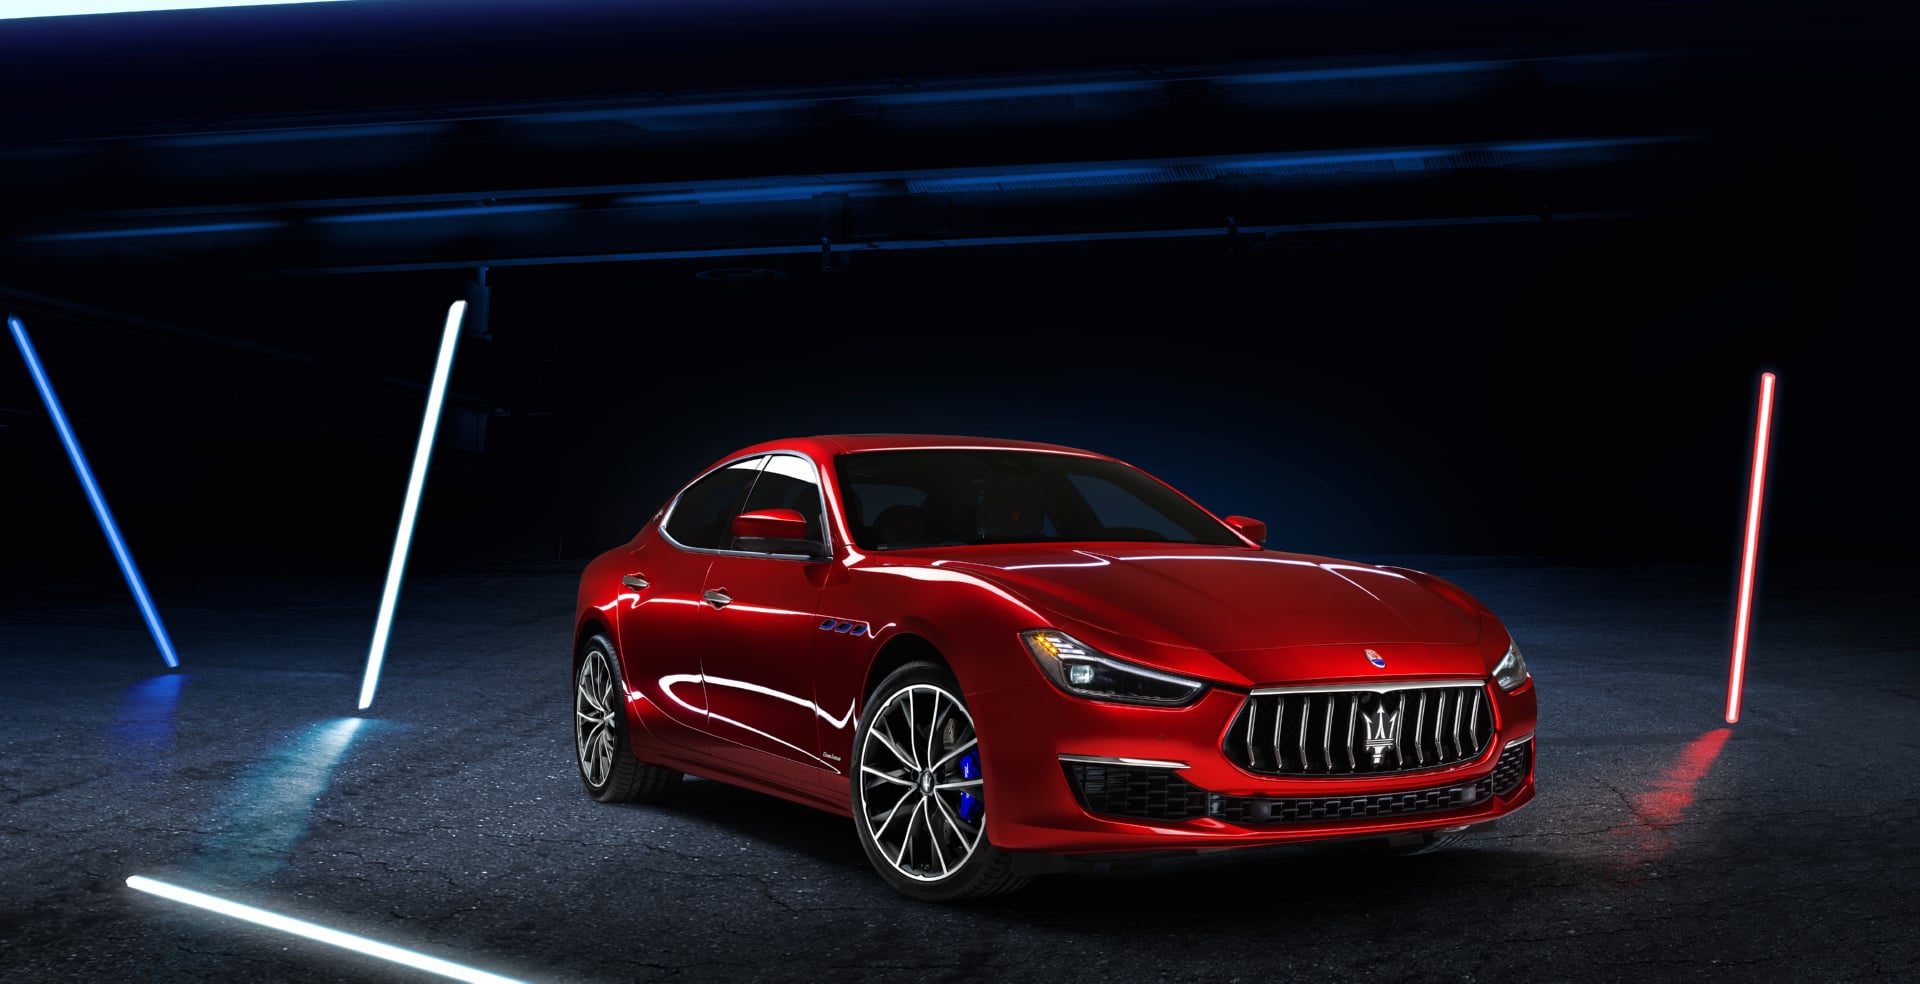 Maserati Ghibli GranLusso Hybrid at 1600 x 1200 size wallpapers HD quality